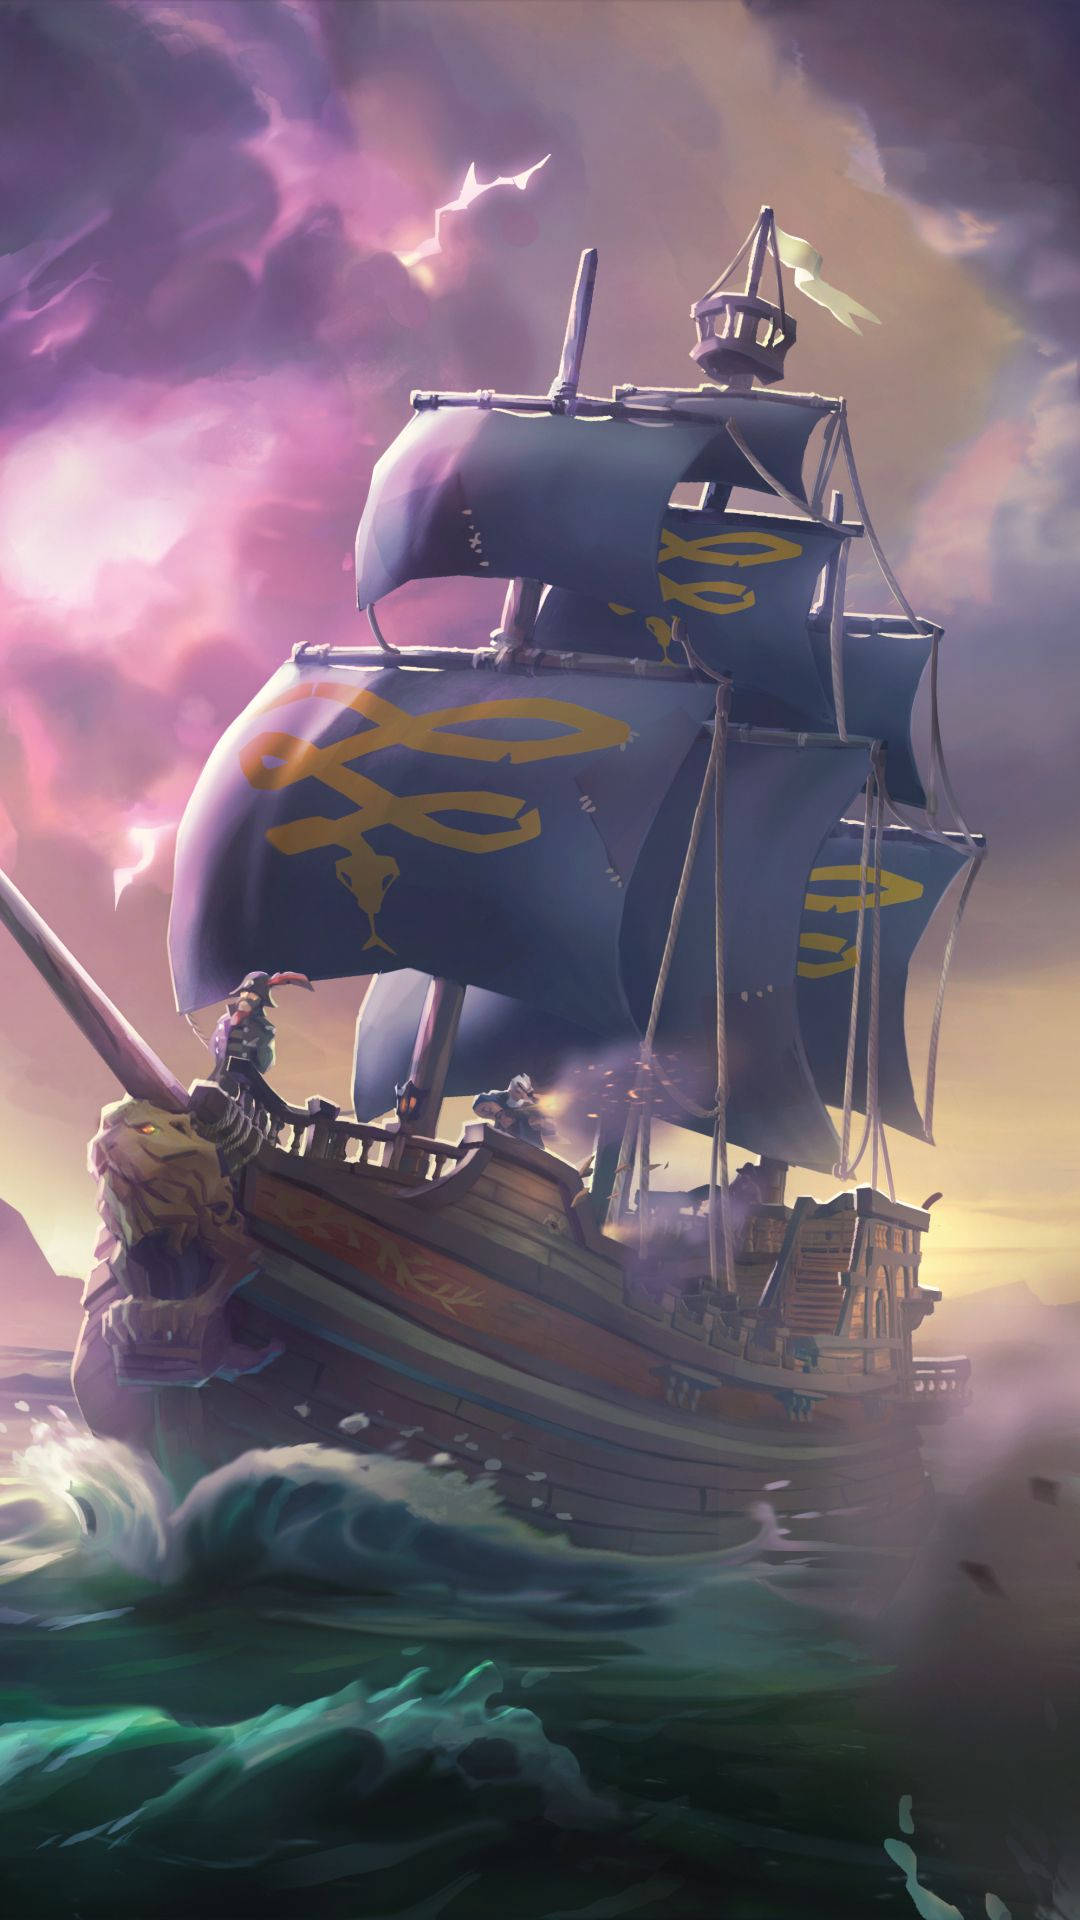 Sailing Ship In Purple Ocean Wallpapers